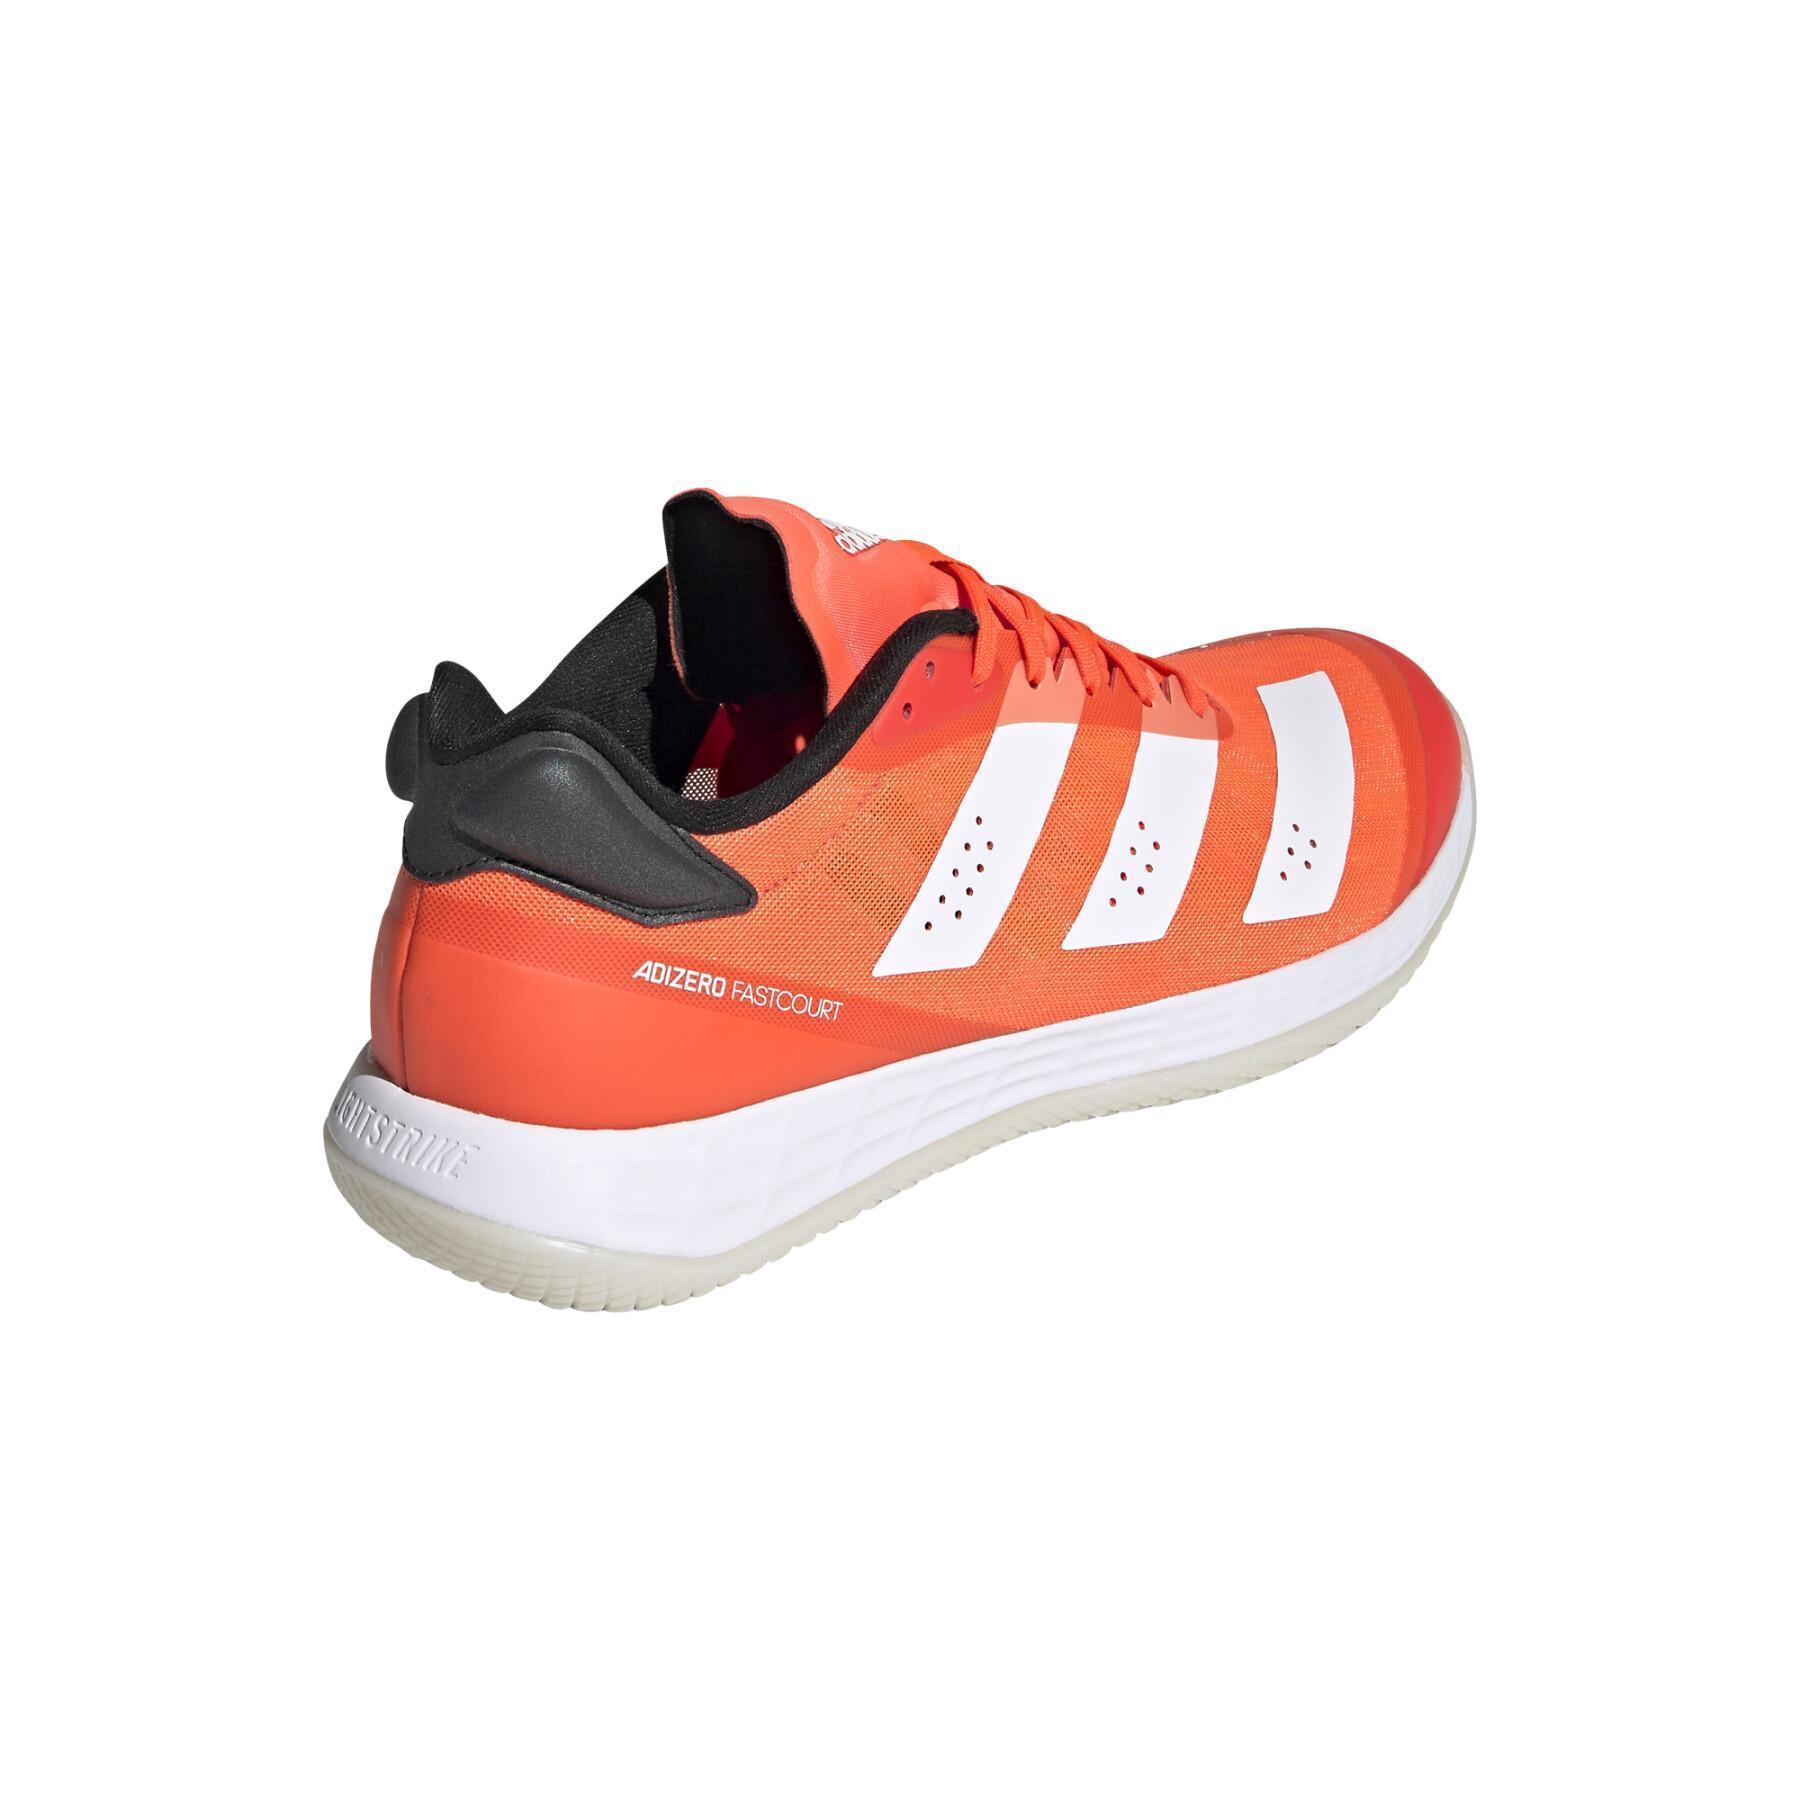 Chaussures de handball adidas Adizero Fastcourt 2.0